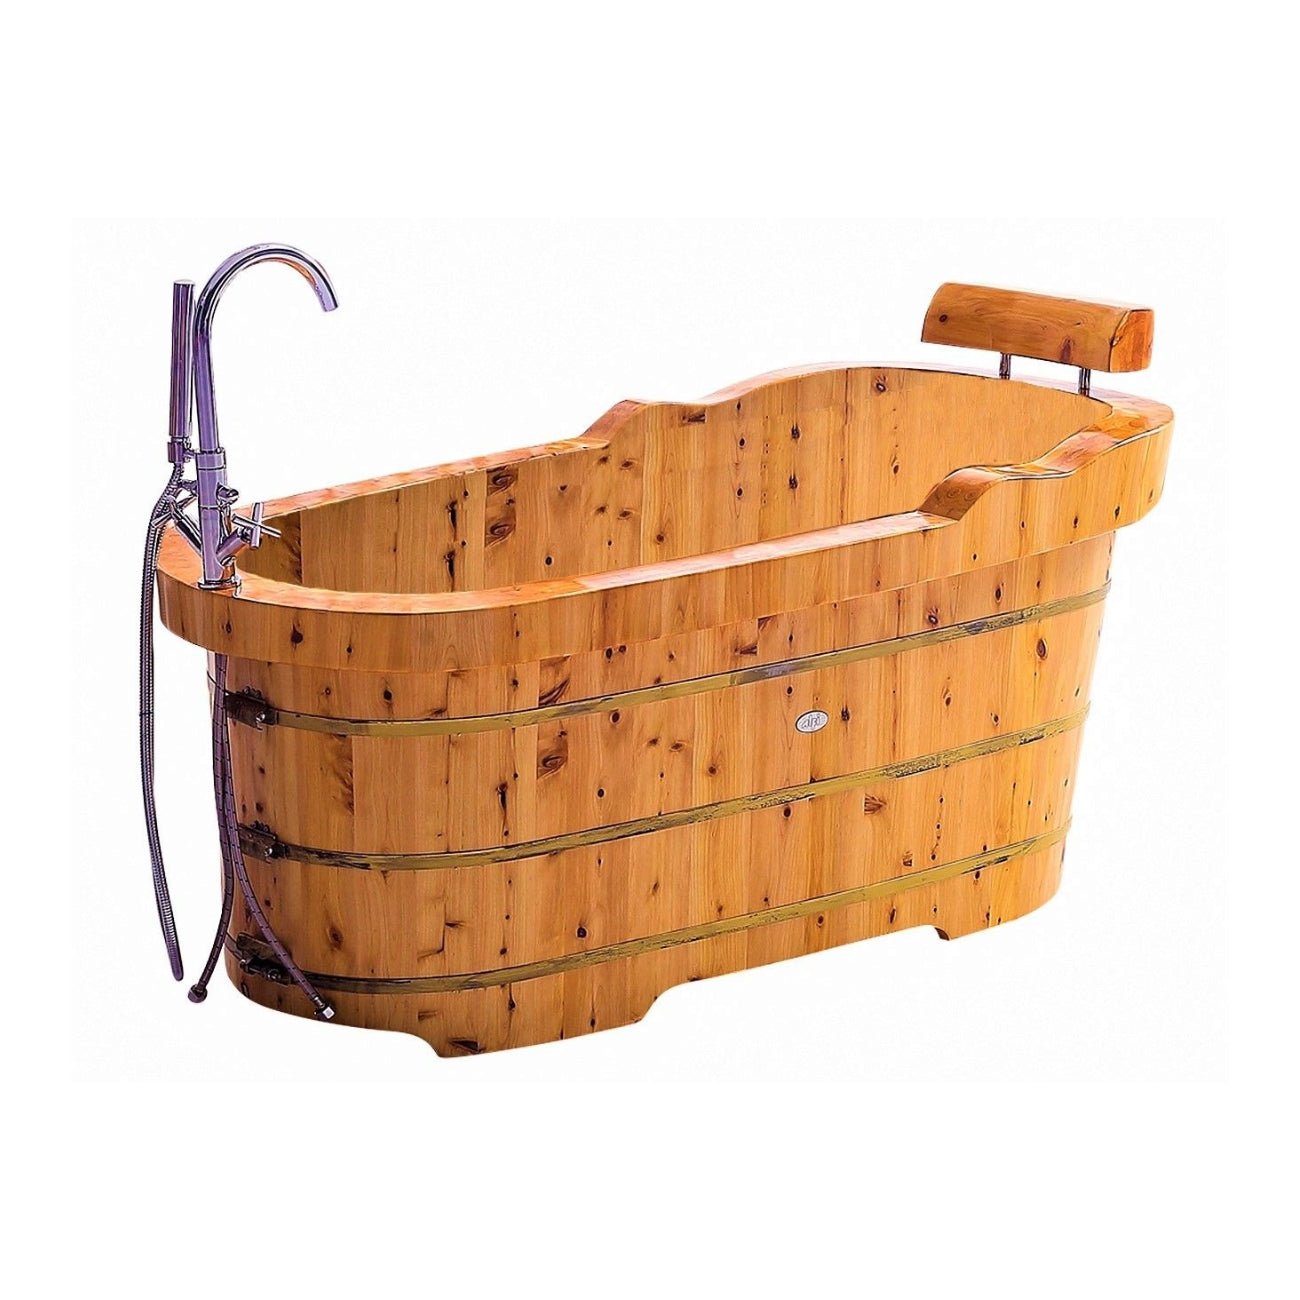 ALFI brand Cedar Wooden Bathtub with Fixtures & Headrest - Elite Vitality